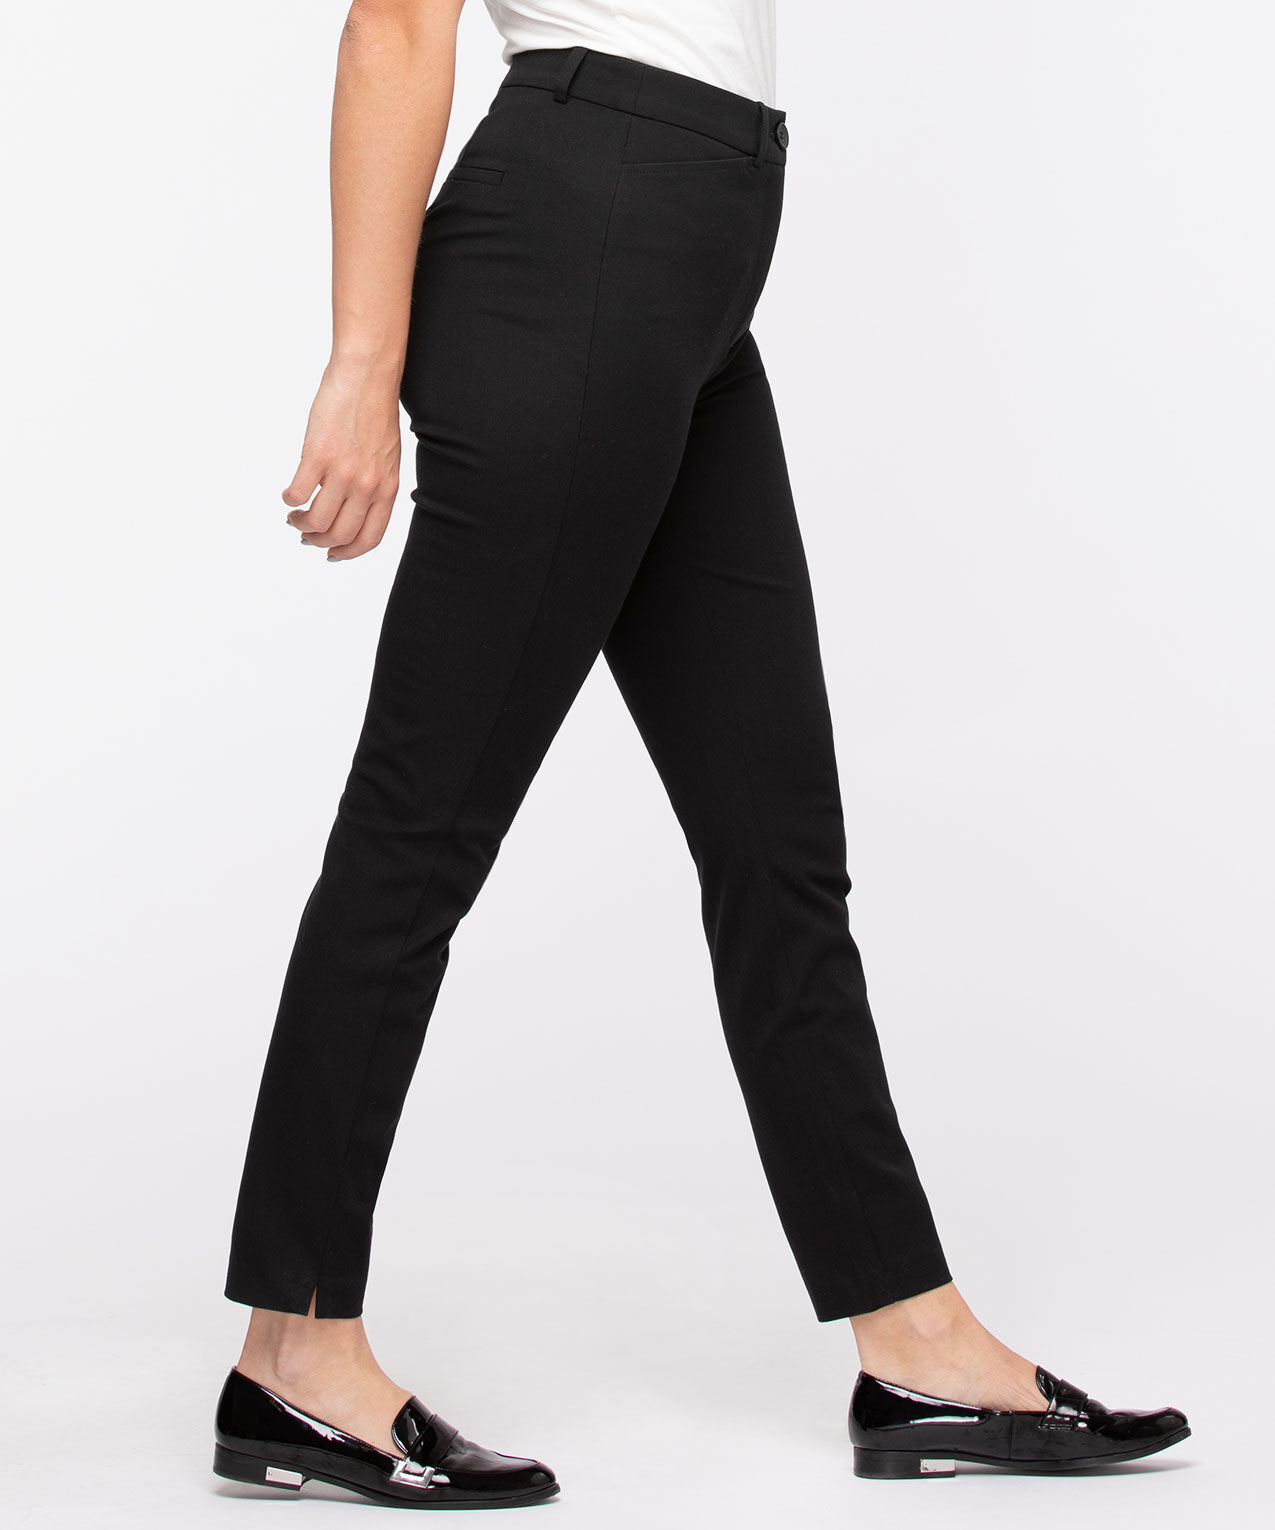 Comfortwaist stretch pant  Contemporaine  Shop Womenu2019s Skinny Pants  Online in Canada  Simons